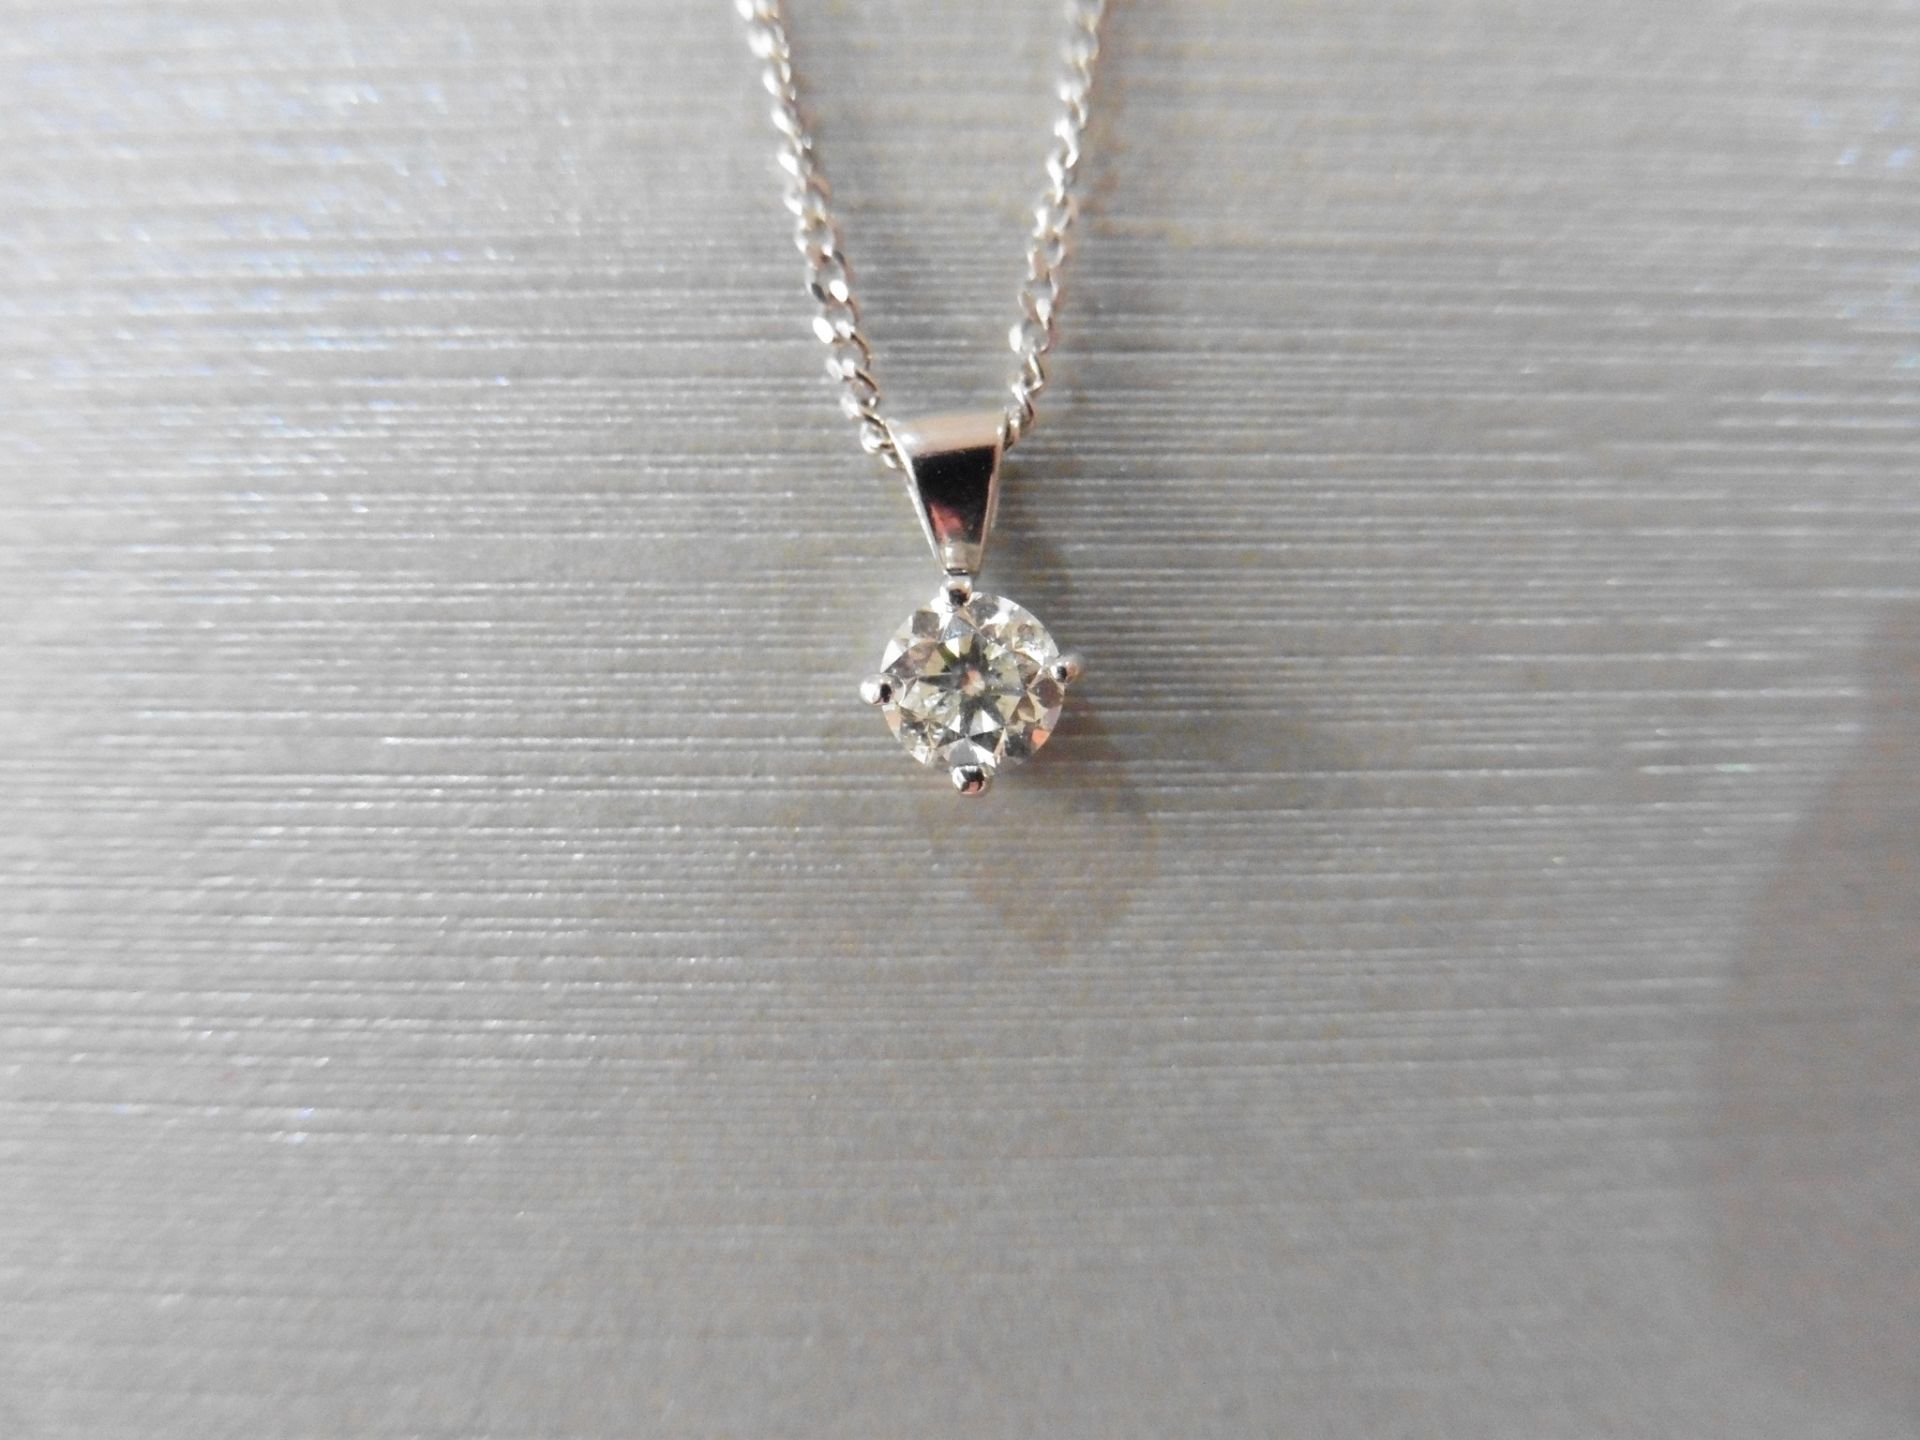 diamond solitaire pendant set with a 0.30ct brilliant cut diamond, H/I colour, si3 clarity. Four